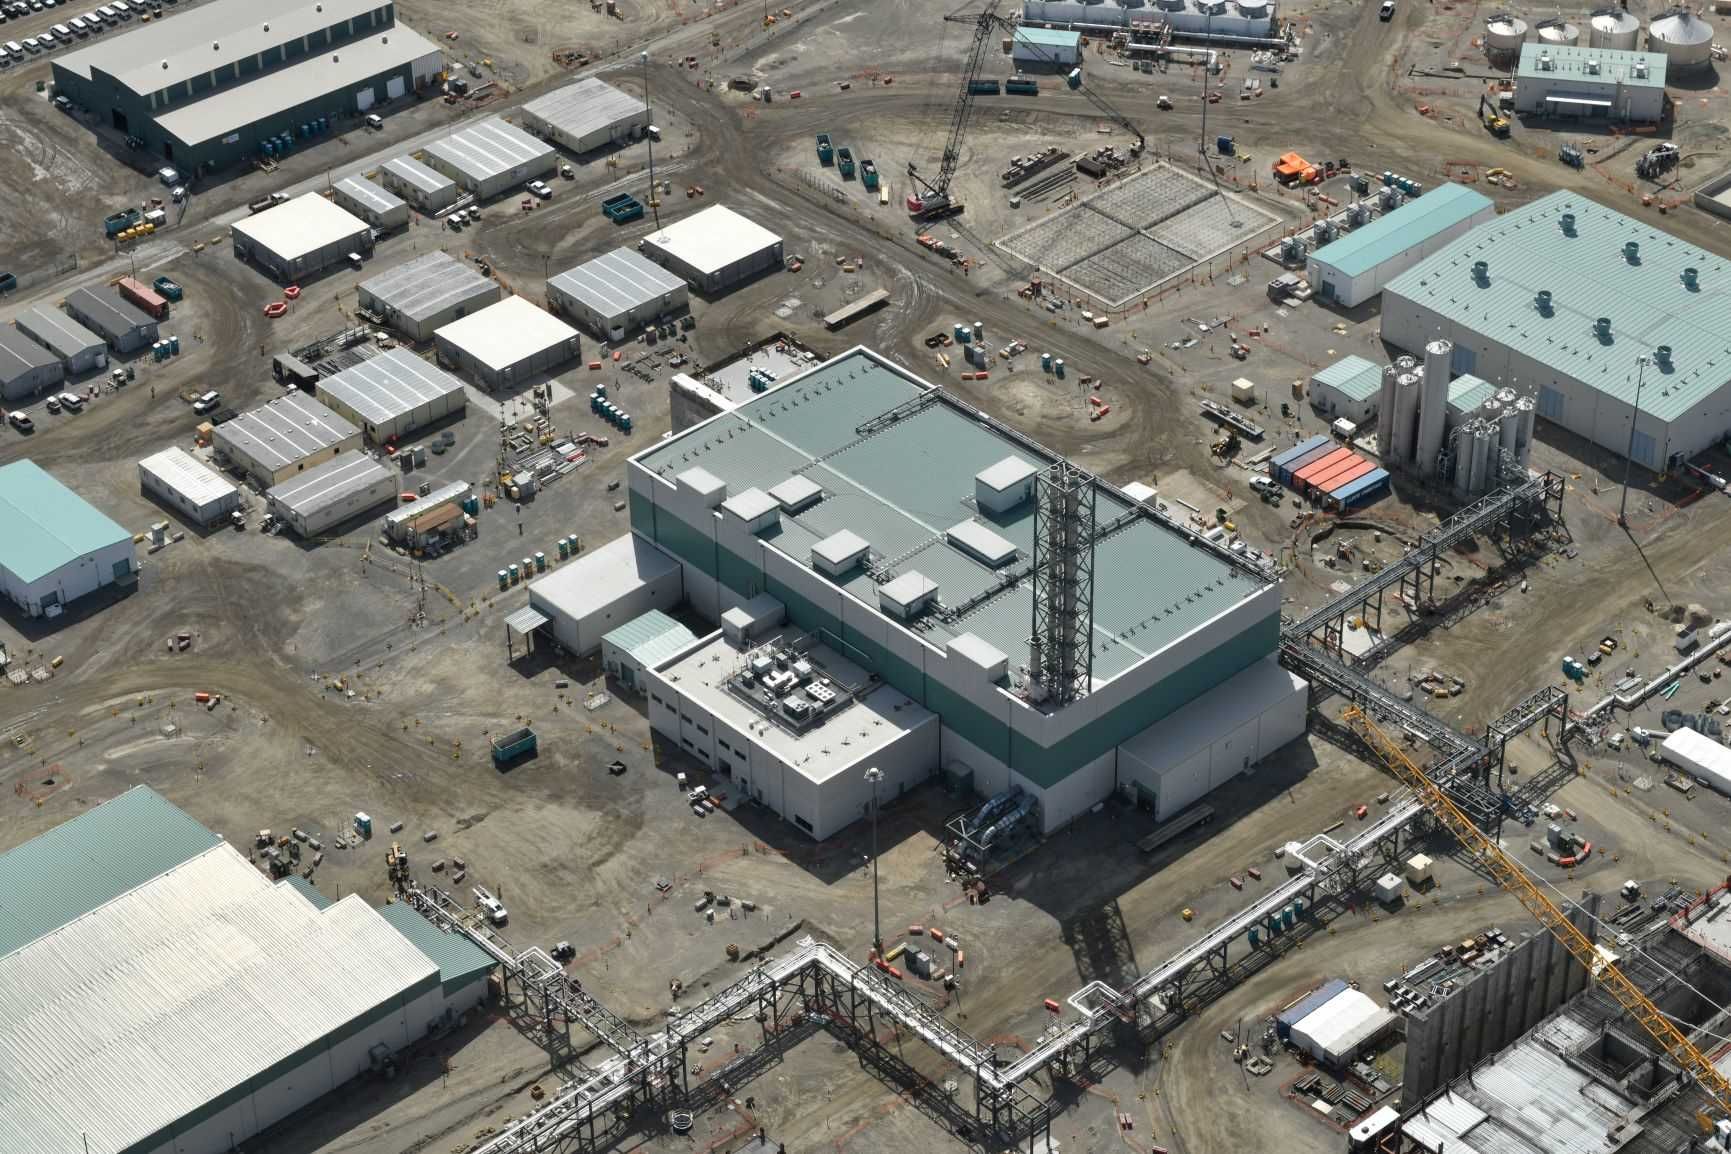 Bechtel, U.S. Department of Energy Open Control Room for Radioactive Waste Treatment Plant